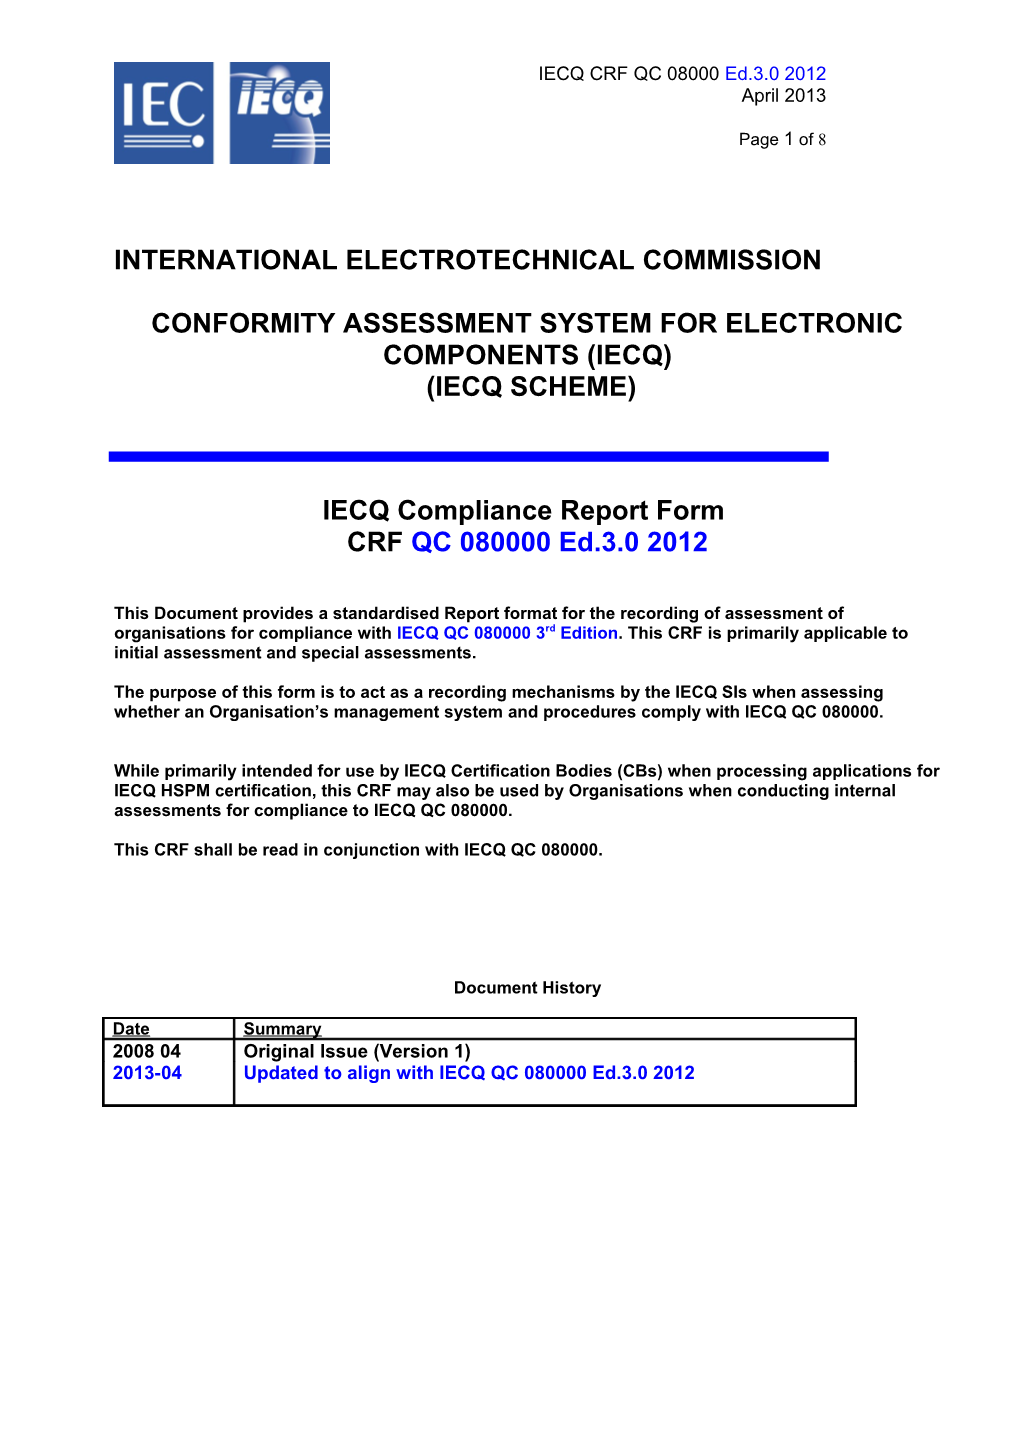 IECQ QC 080000 Compliance Report Form (CRF)